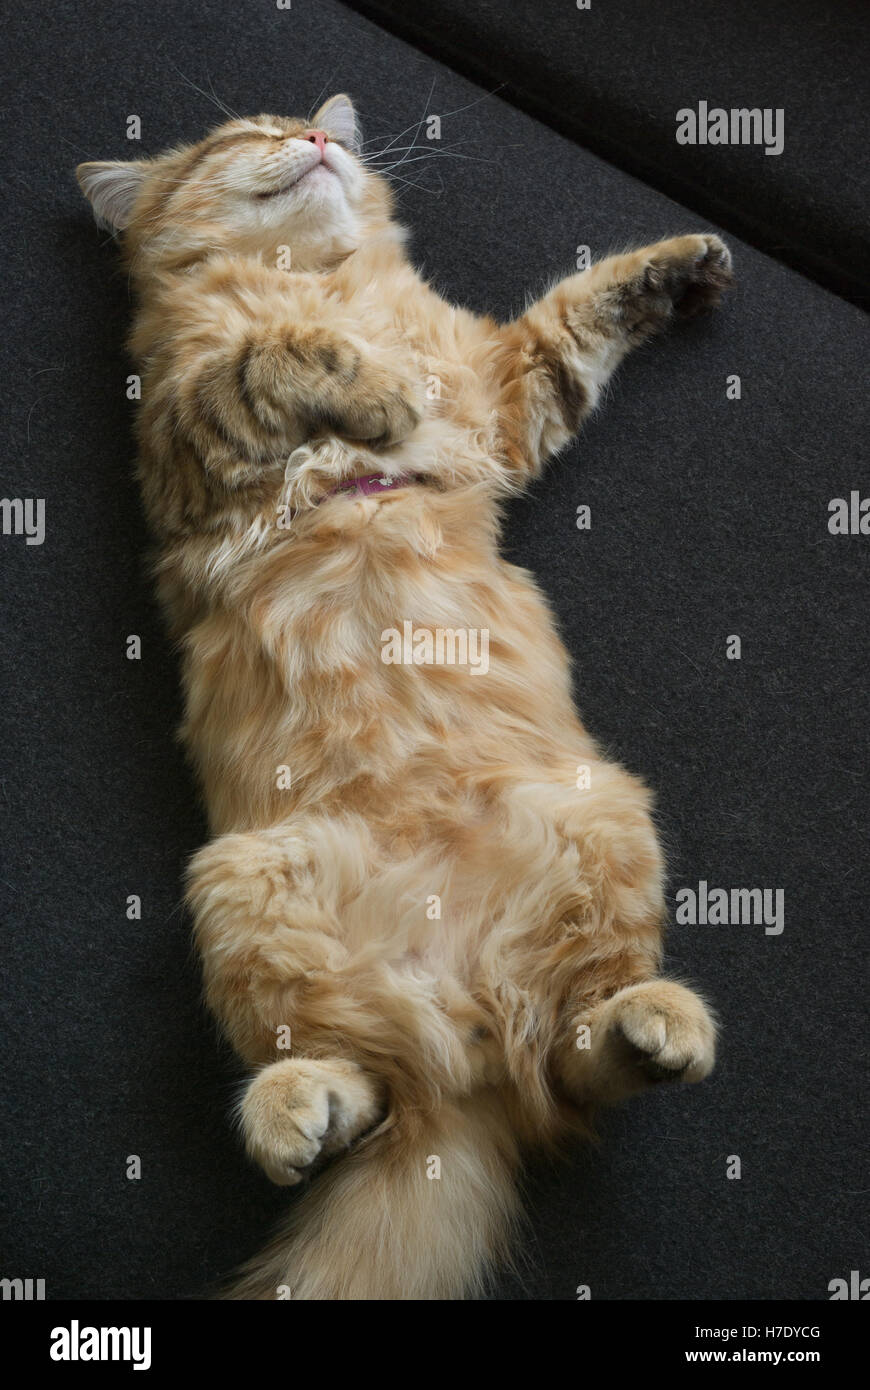 Siberian tabby kitten sleeping belly-up on black fabric, relaxed. Stock Photo